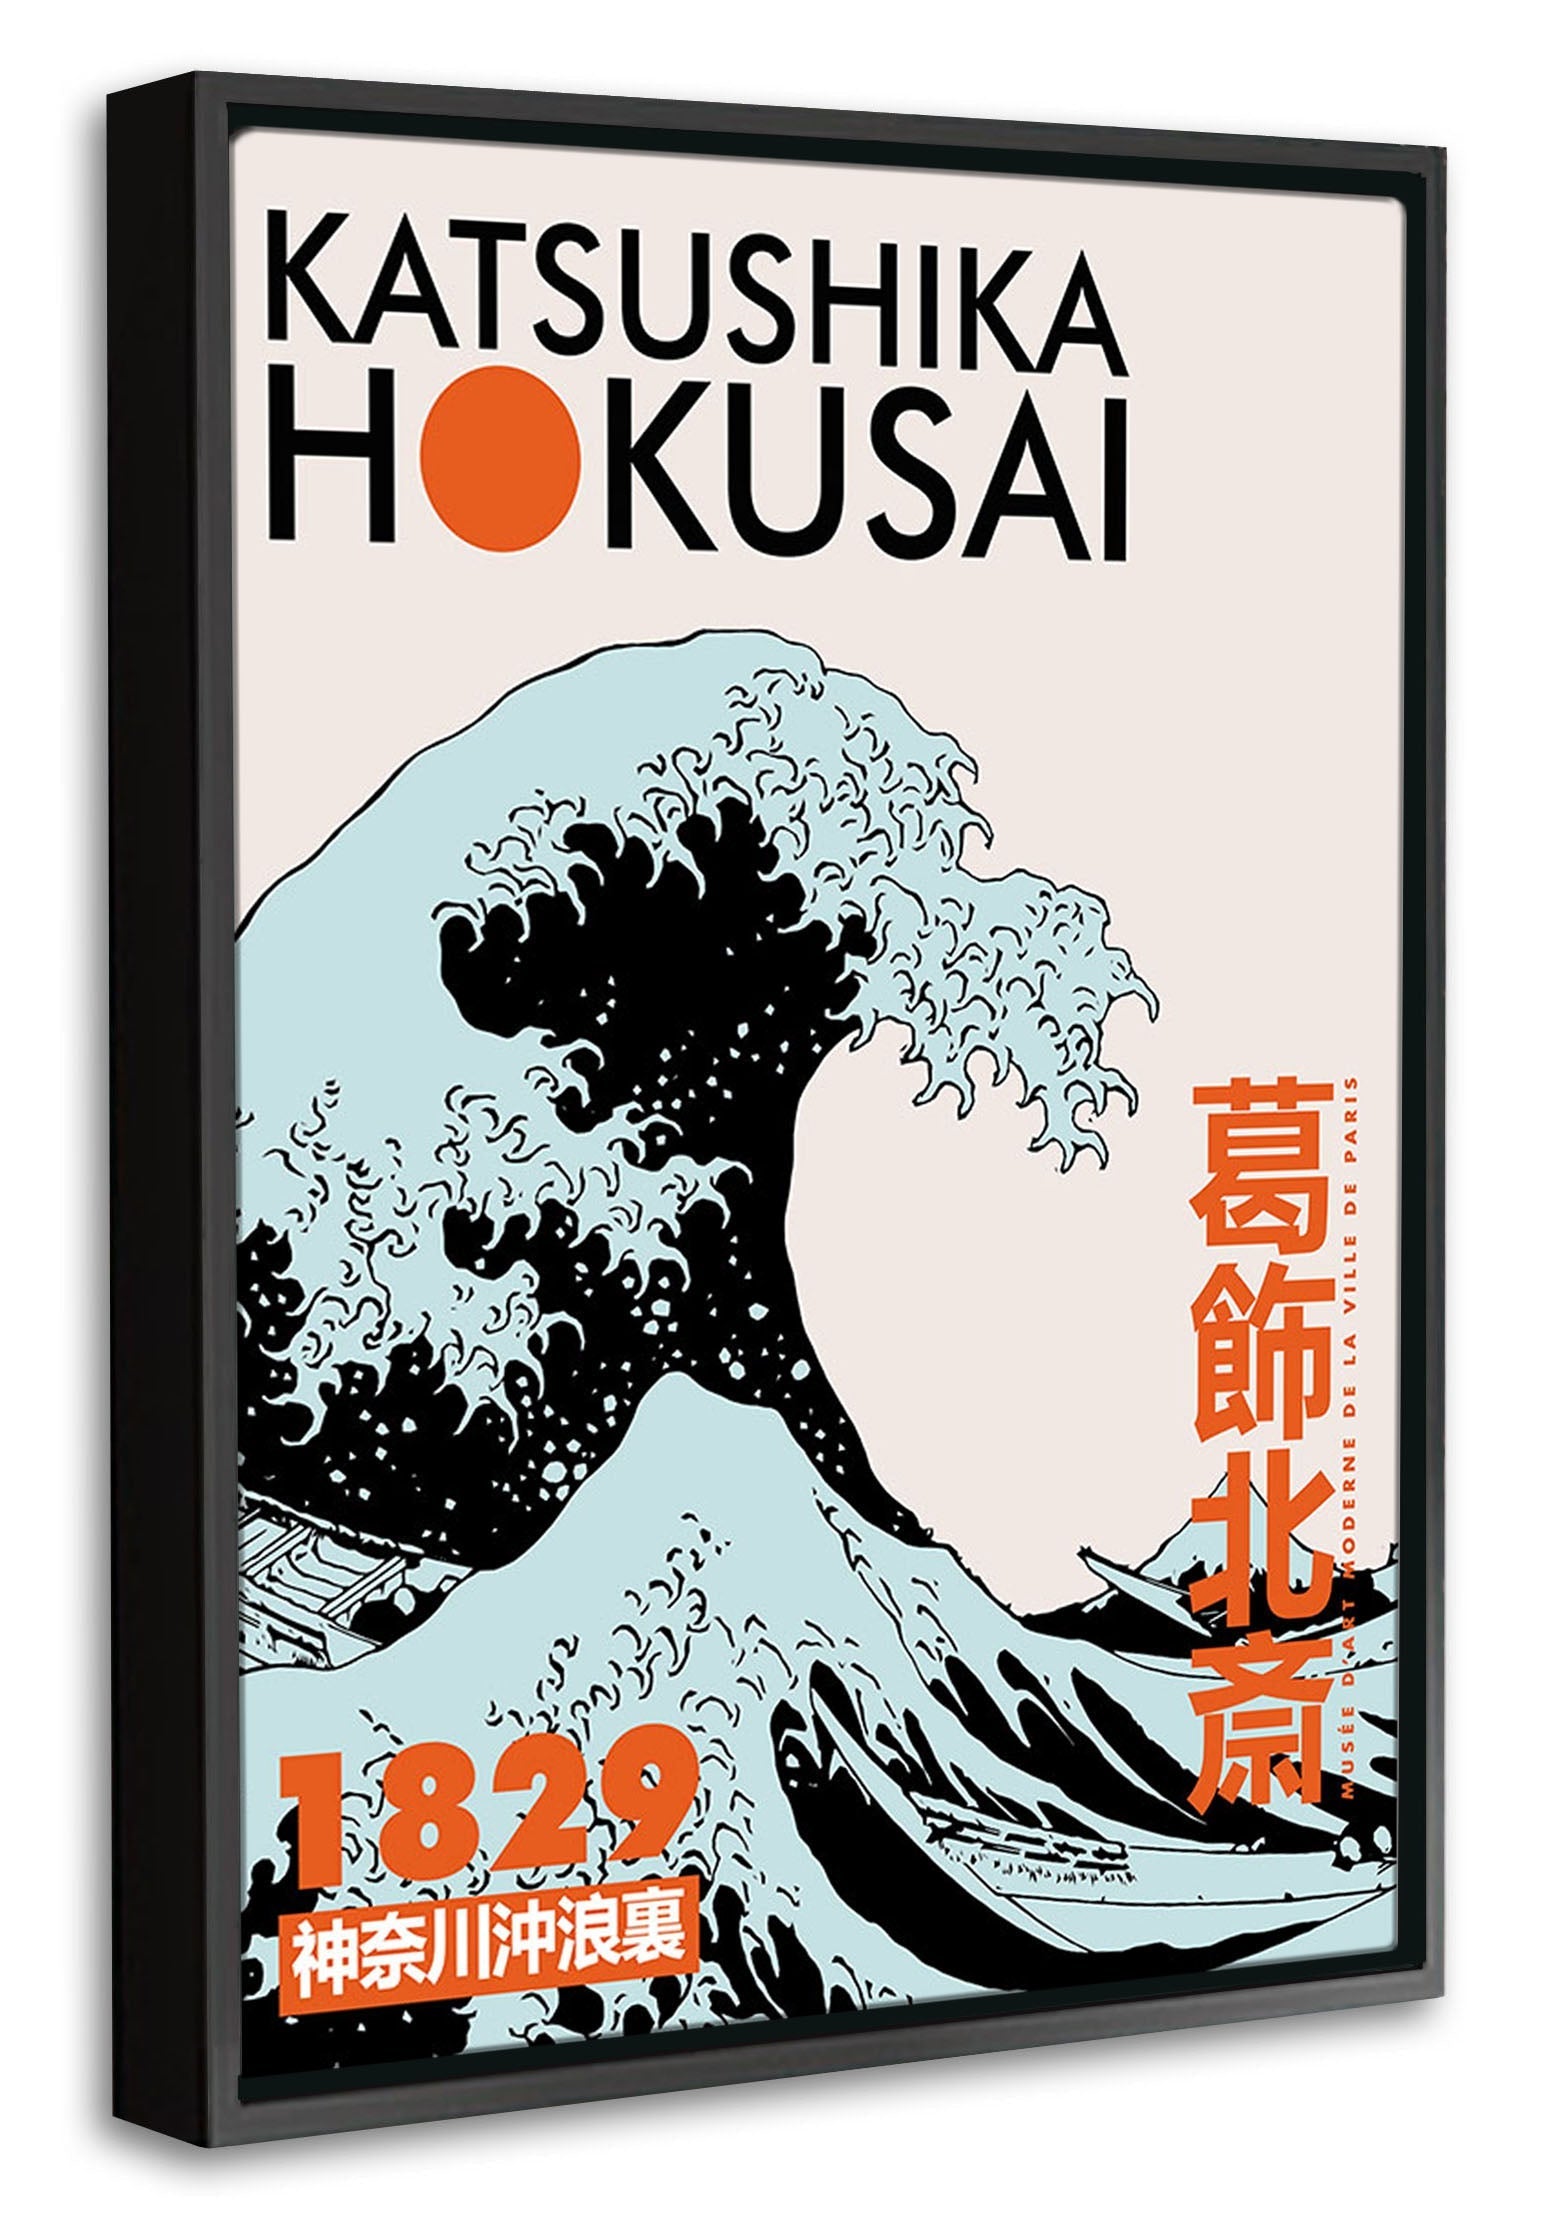 Katsushika Hokusai 1829-expositions, print-Canvas Print with Box Frame-40 x 60 cm-BLUE SHAKER